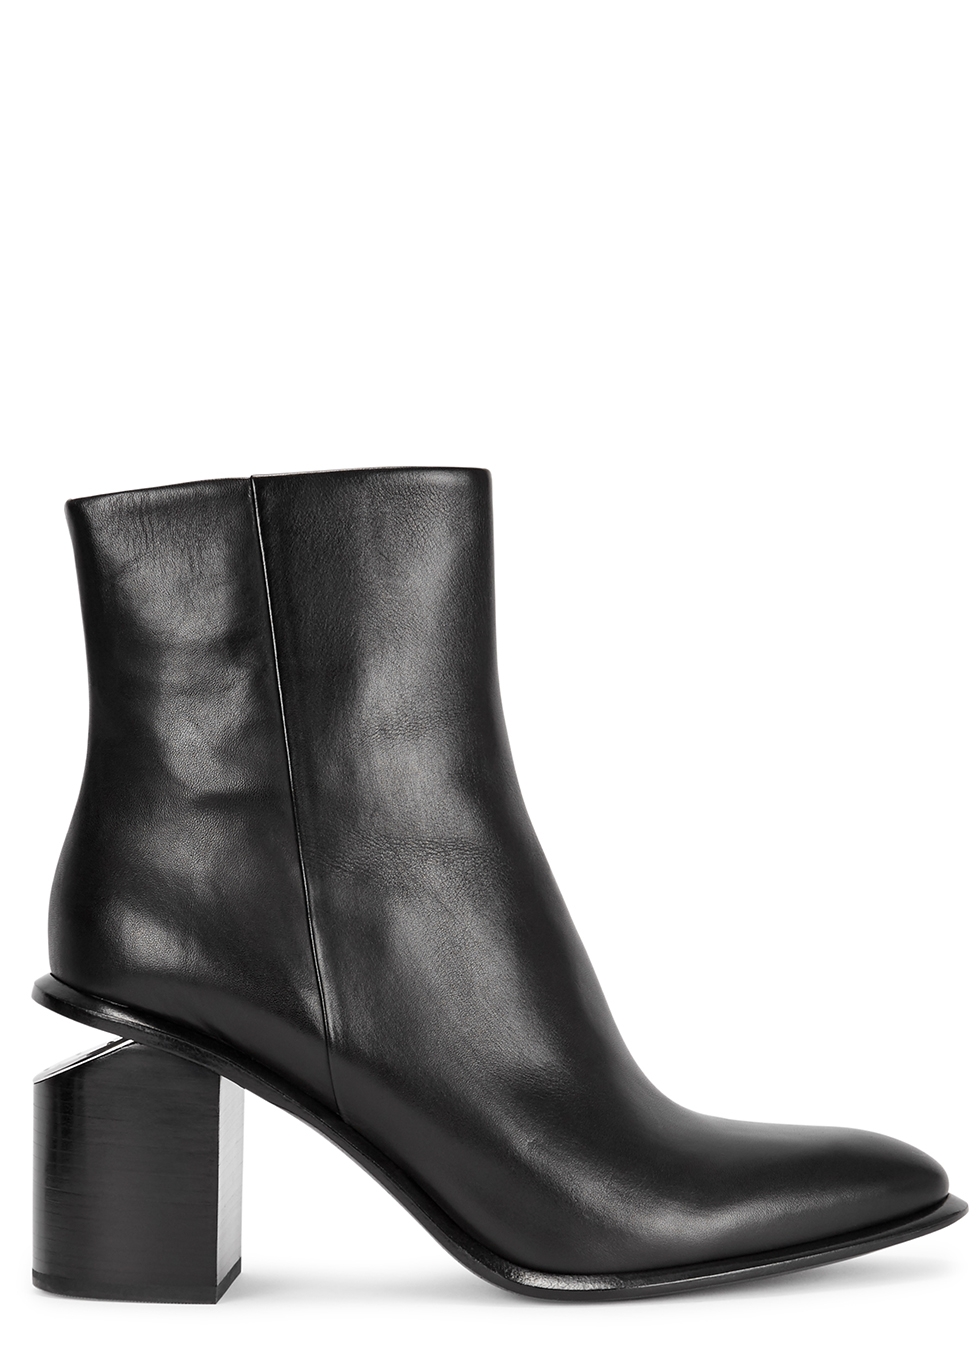 Alexander Wang Anna 80 black leather ankle boots - Harvey Nichols